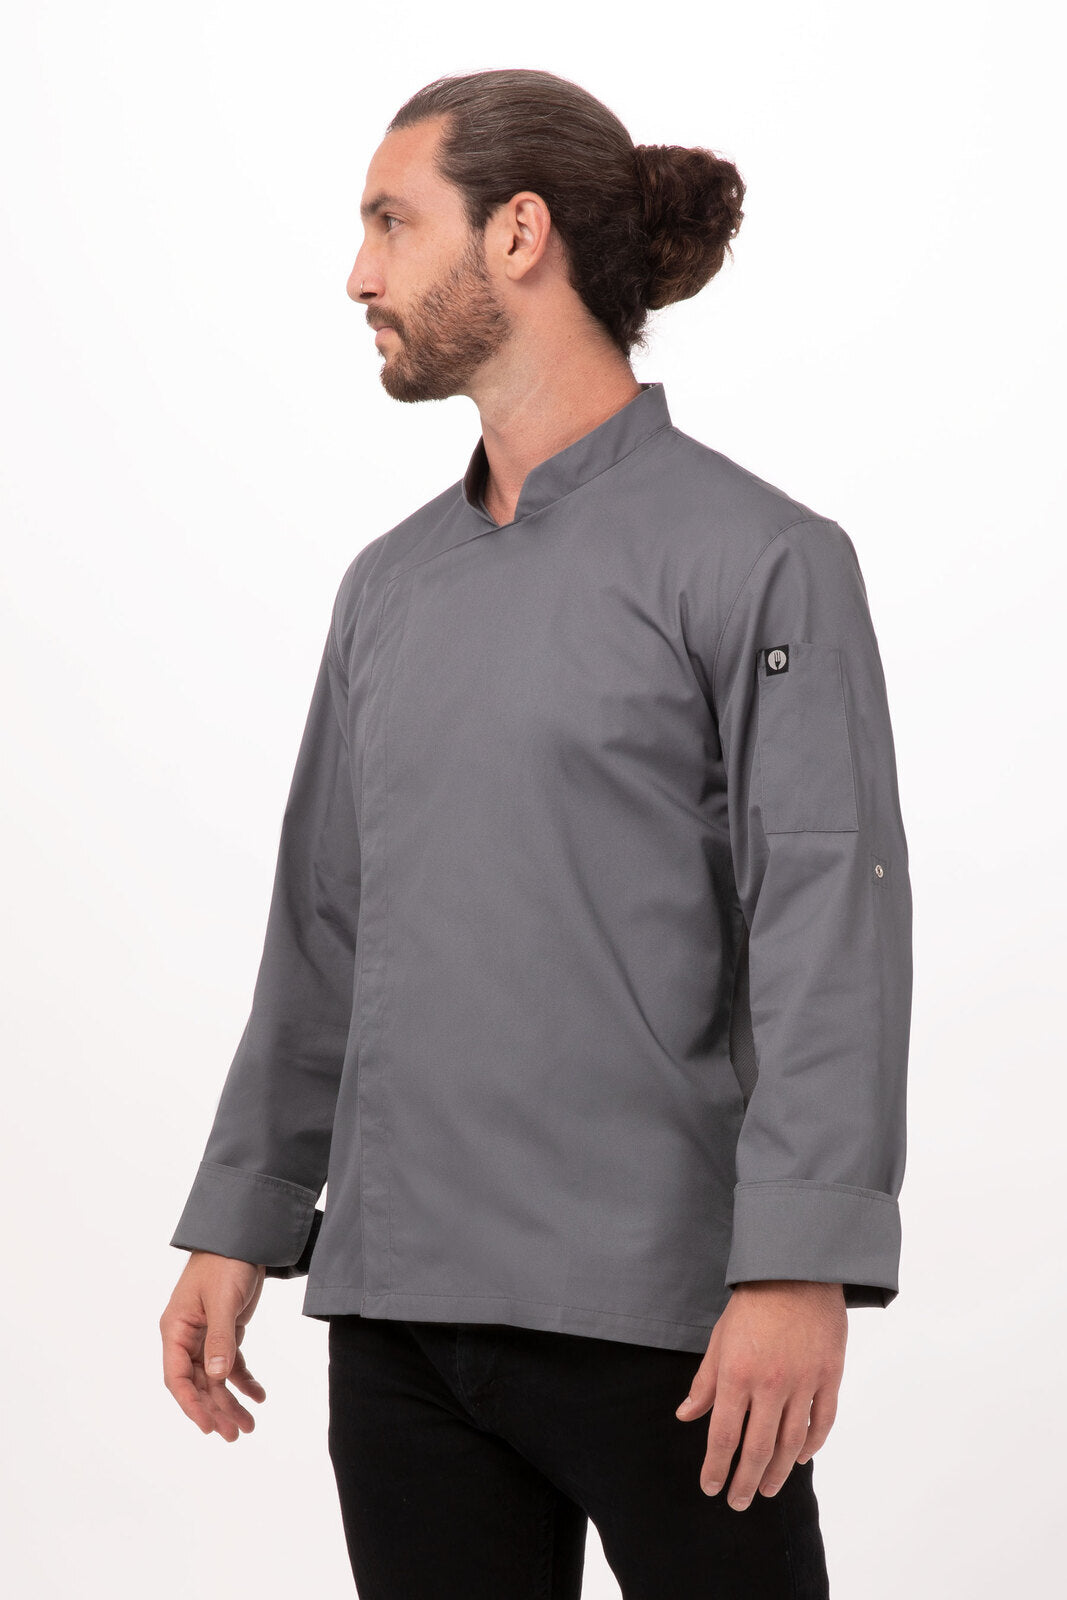 Chef Works - Lansing Chef Jacket